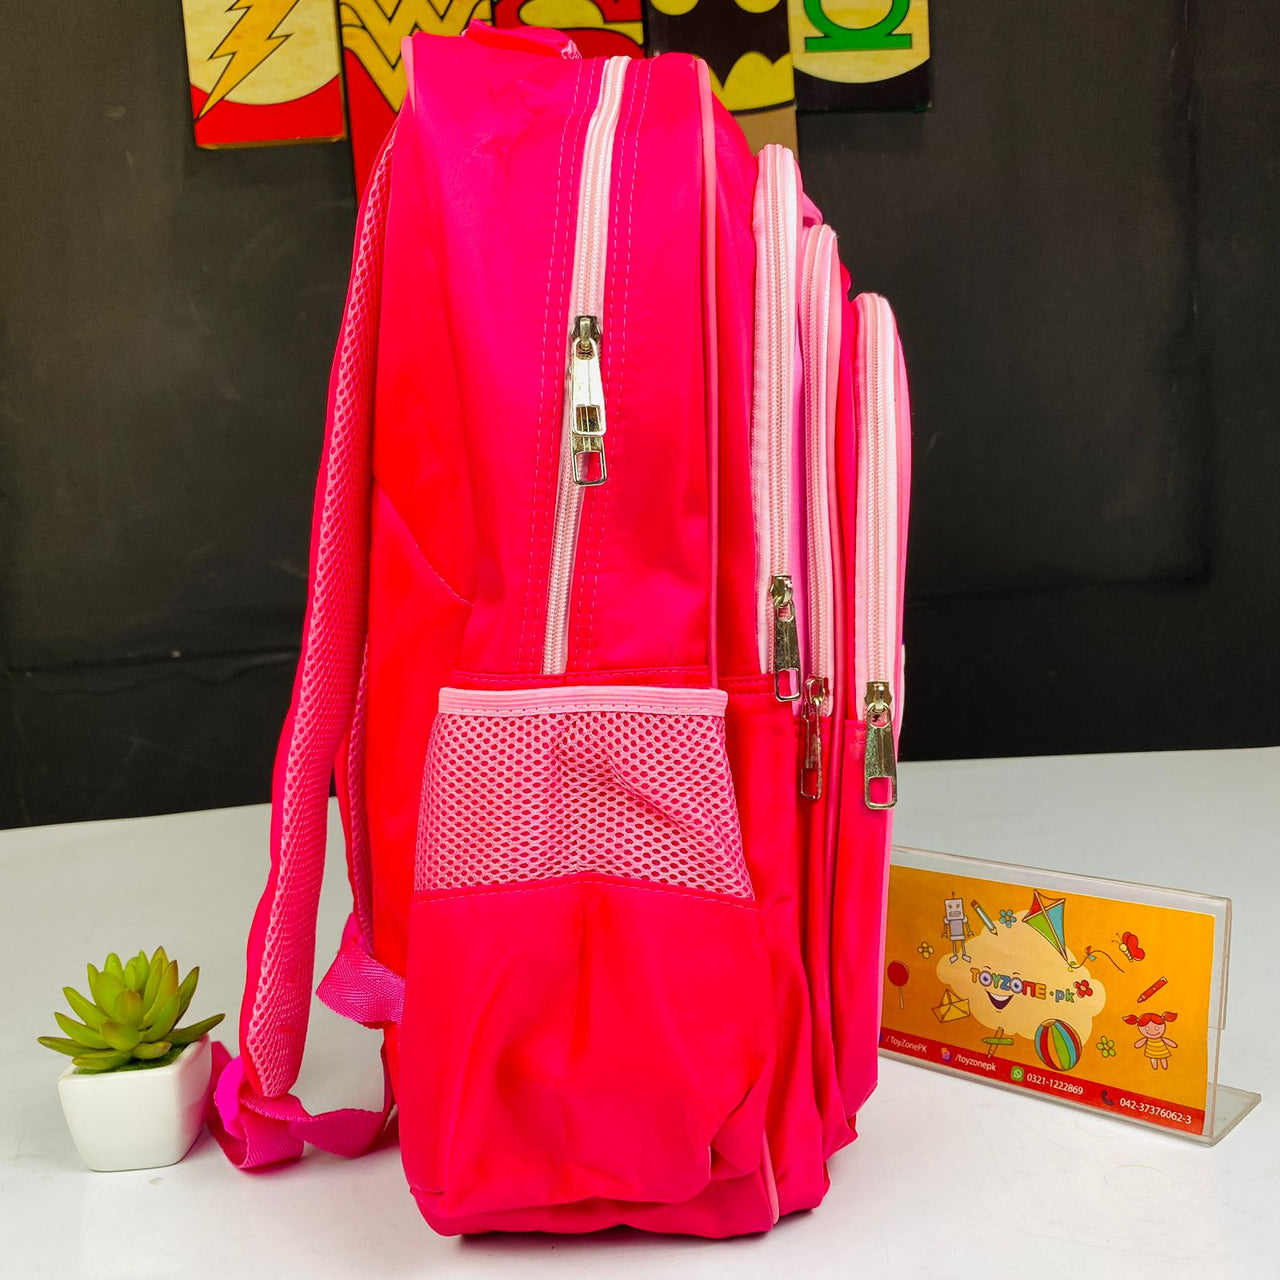 Unicorn Printed Pink School Bag For Kids